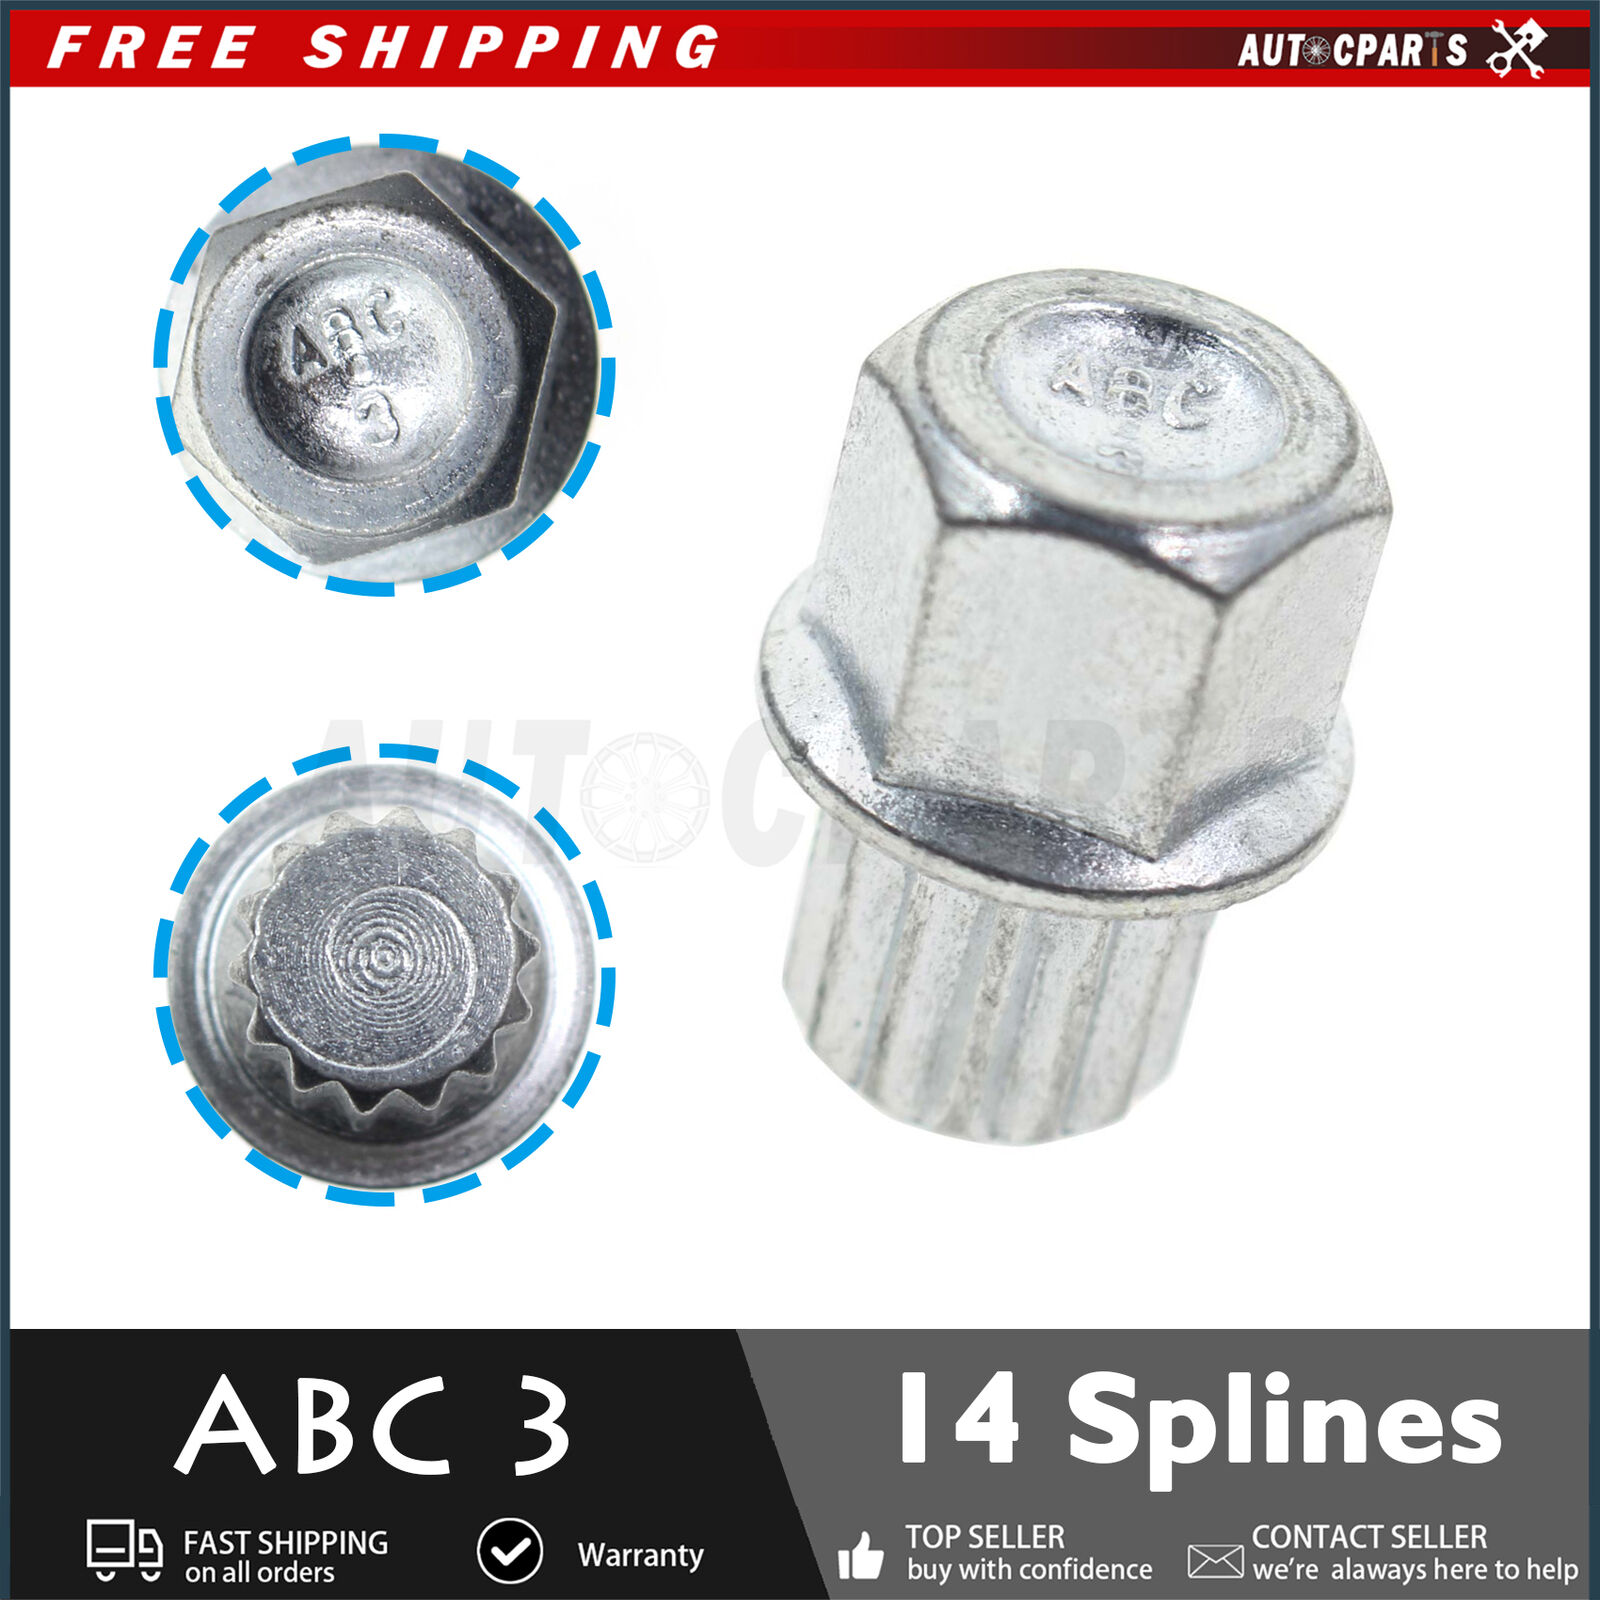 NEW ABC 3 = 14 splines(ABC 3/14 splines) Wheel Lock Key for VW Volkswagen Audi